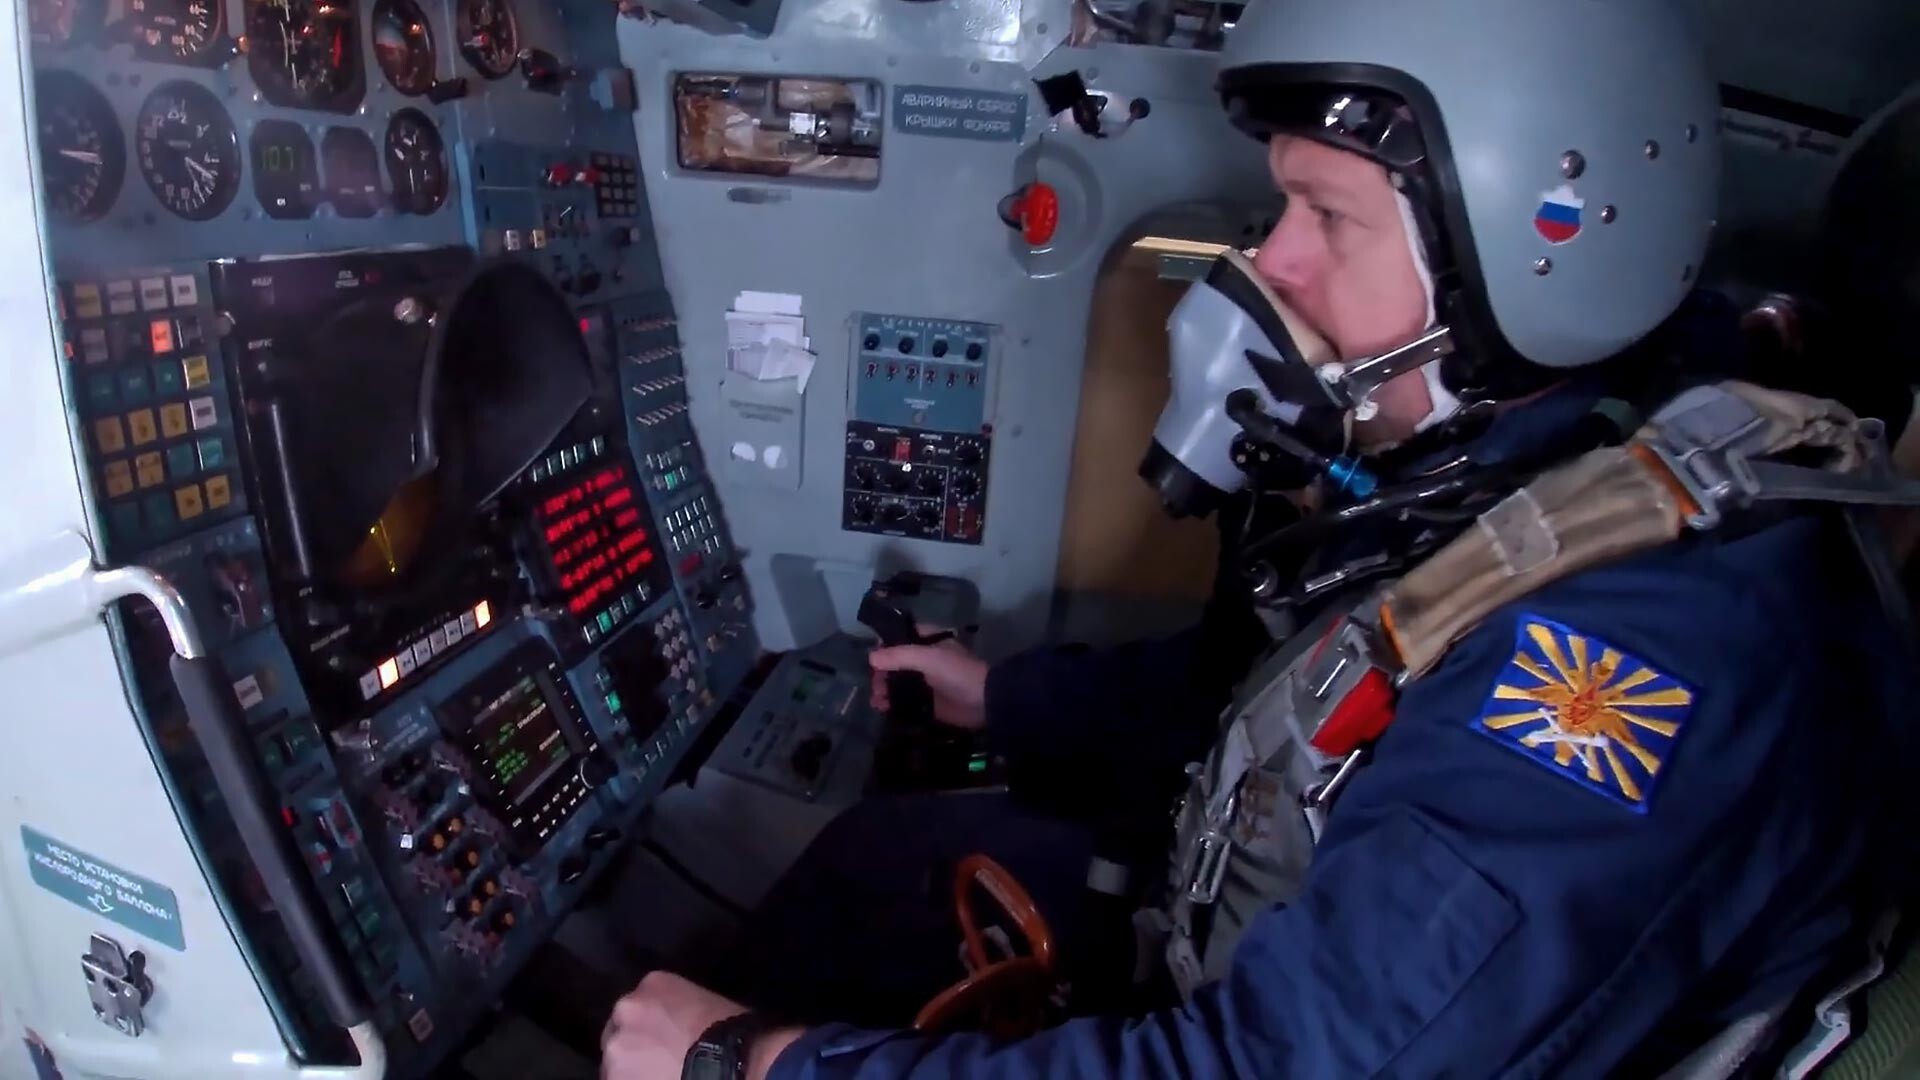  2020. Un piloto de un avión bombardero estratégico supersónico Tu-160 durante un vuelo. Ministerio de Defensa ruso.